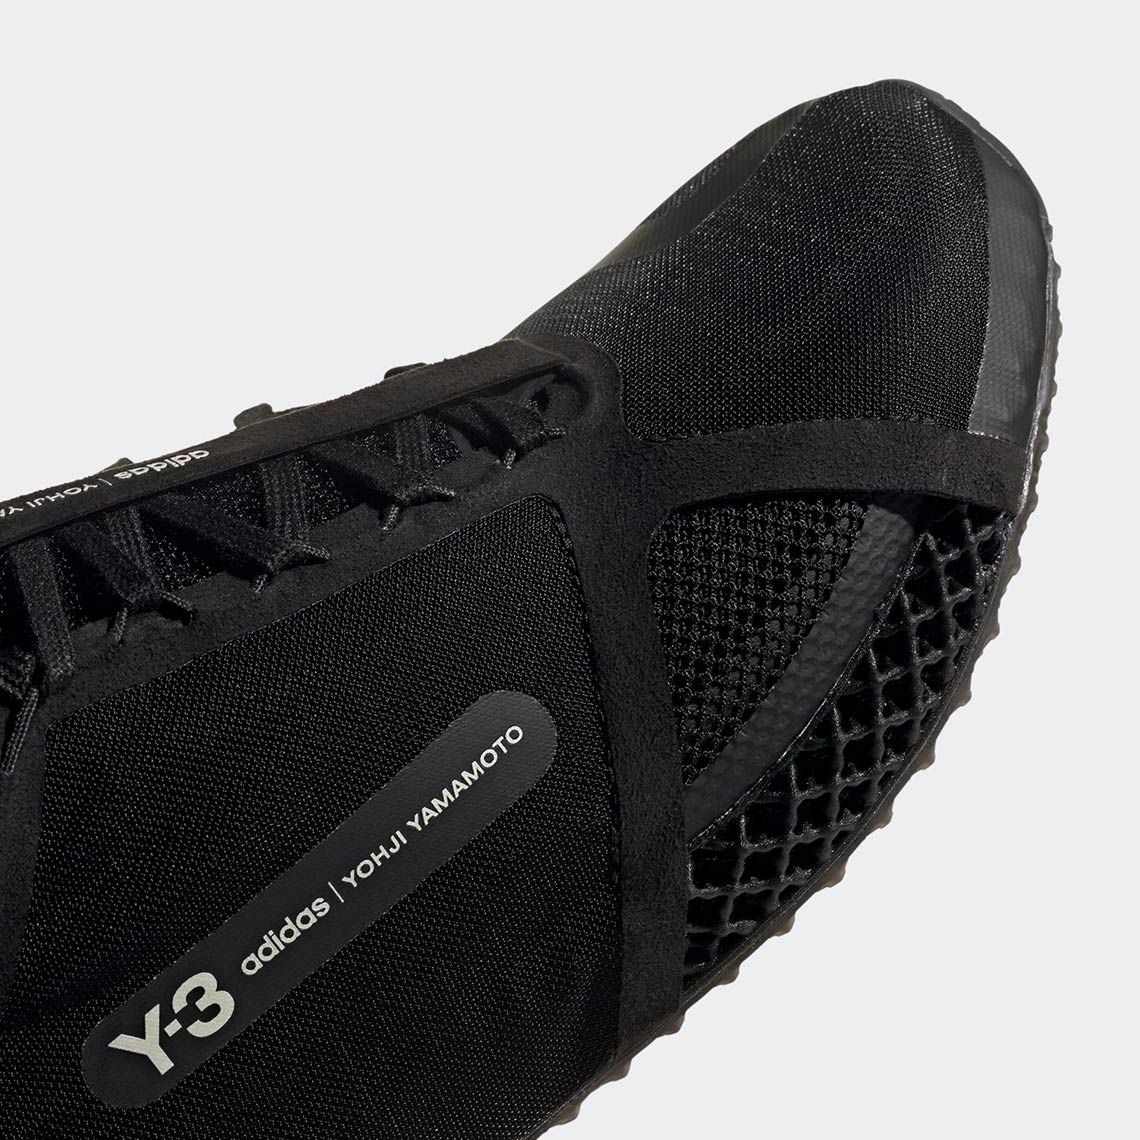 Adidas Y 3 Runner 4d Io Fz4502 Release Info 6